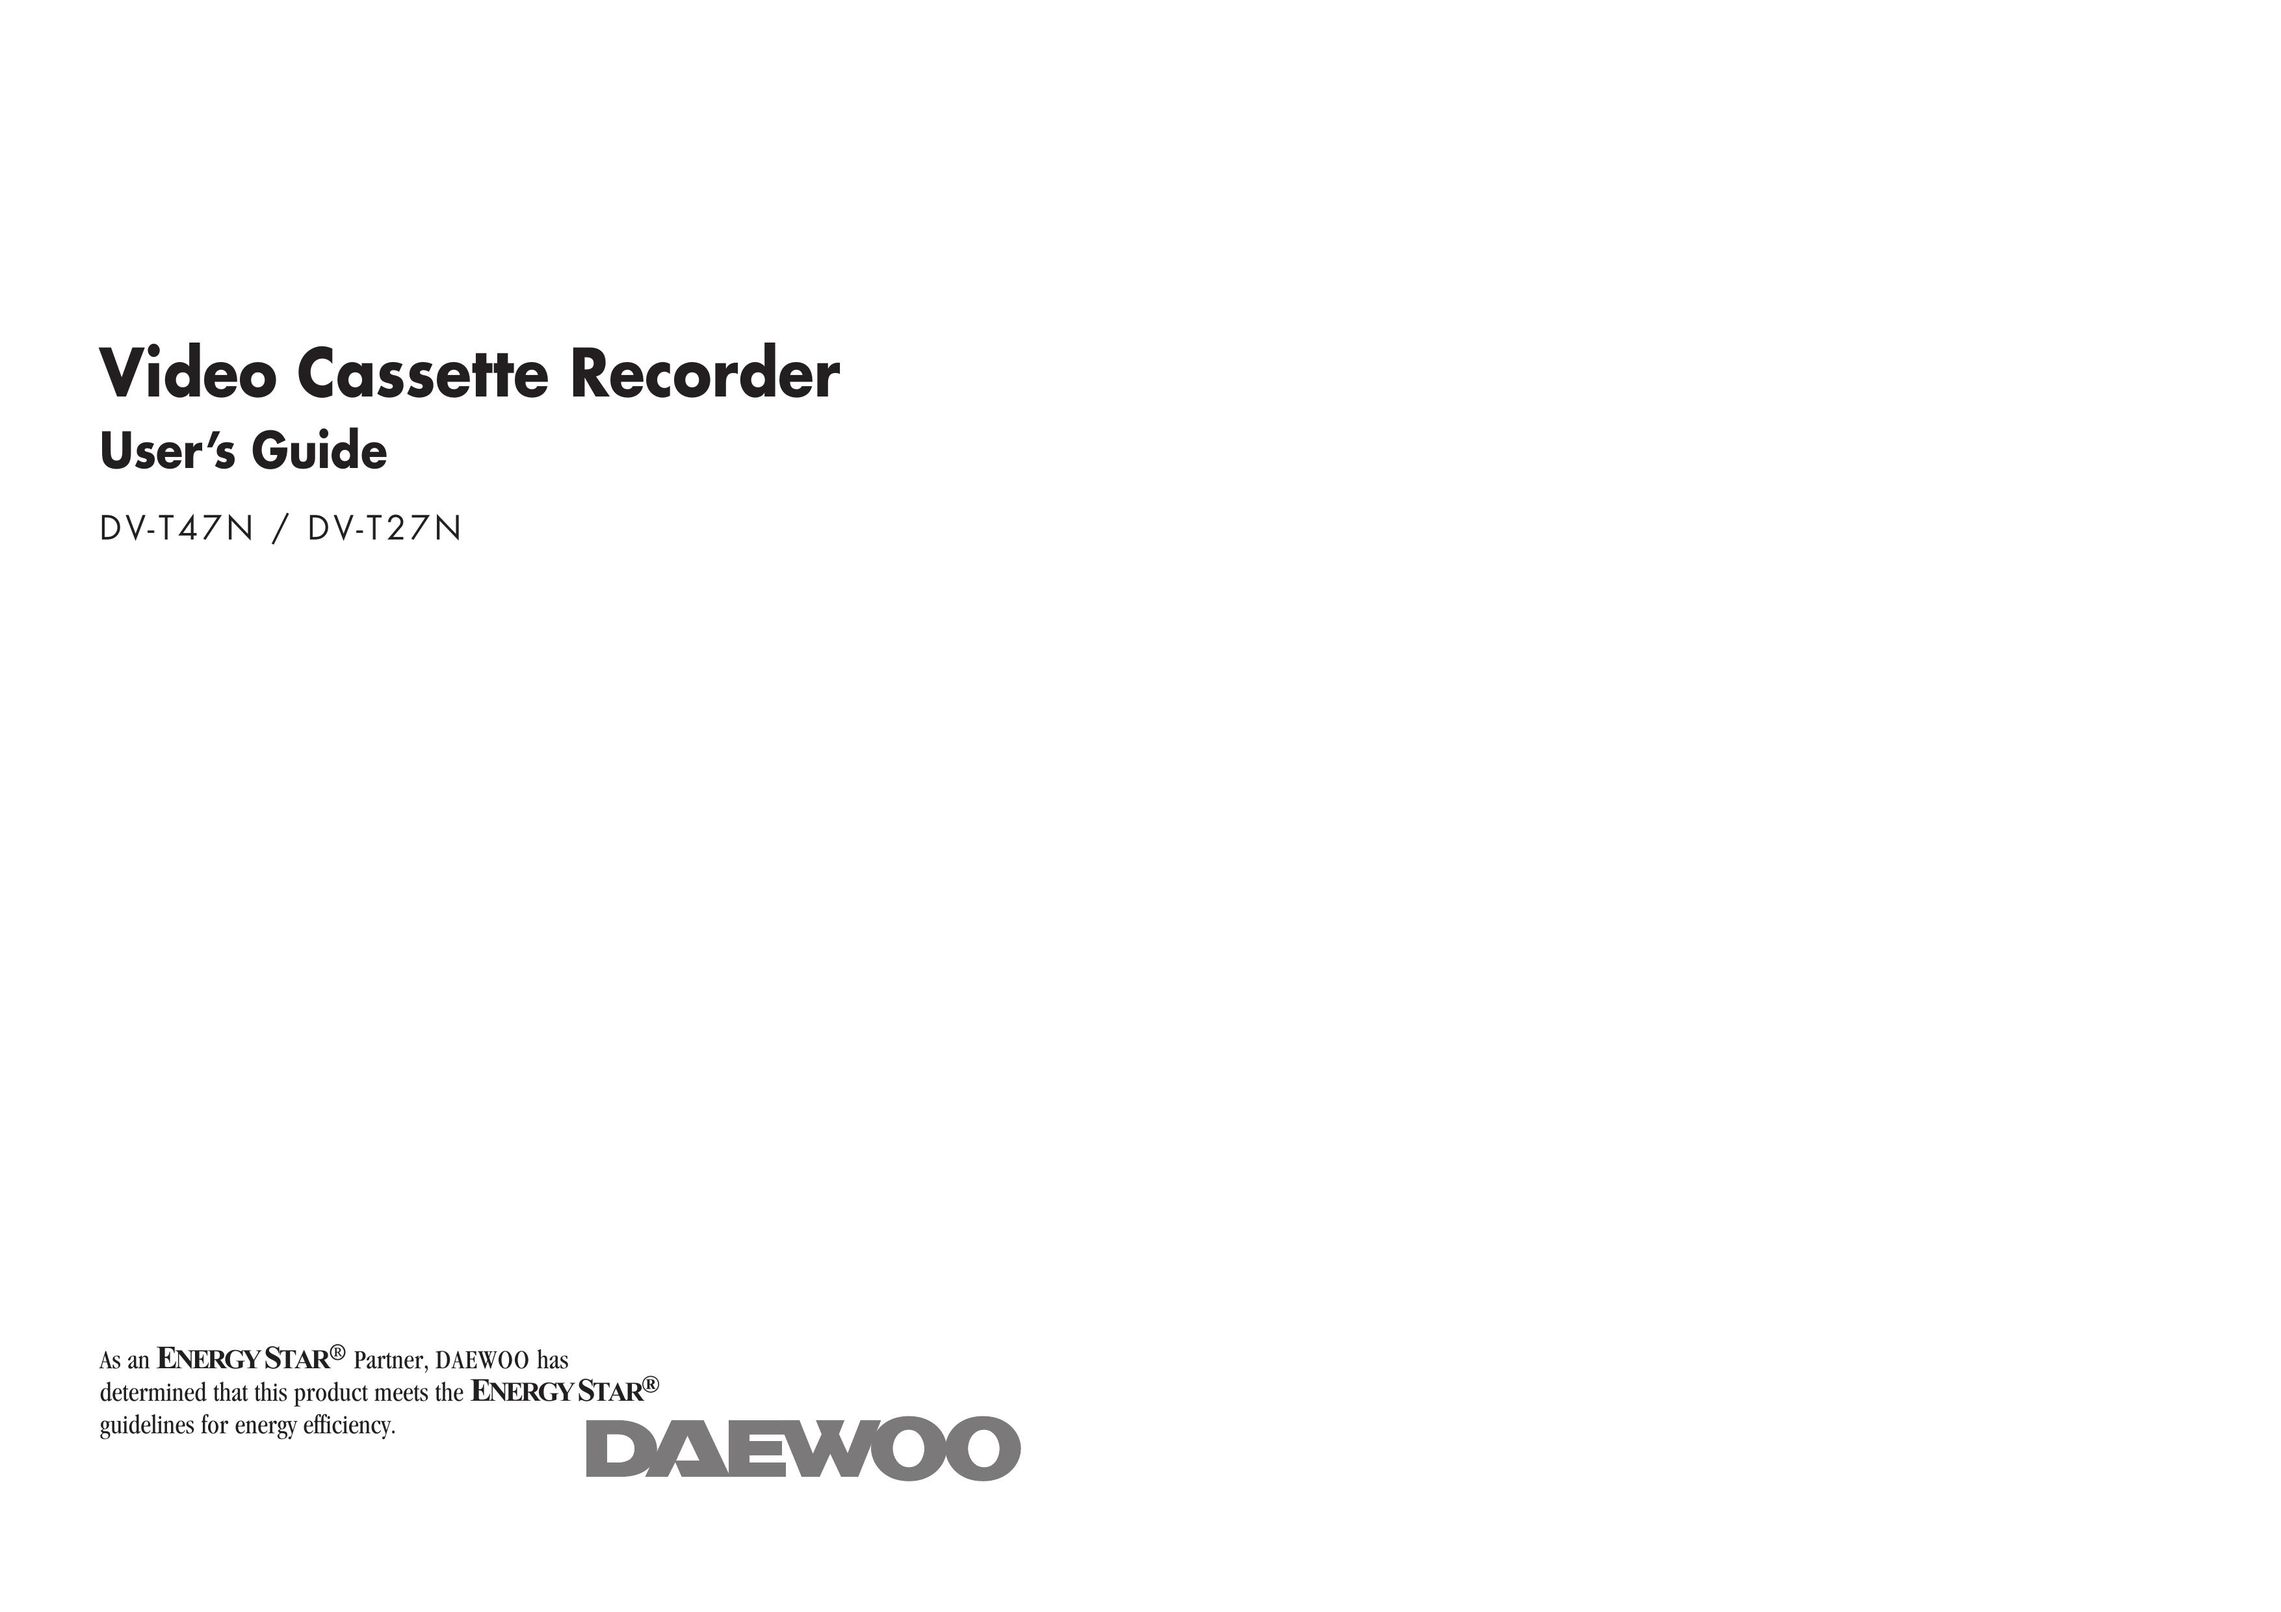 Daewoo DV-T47N VCR User Manual